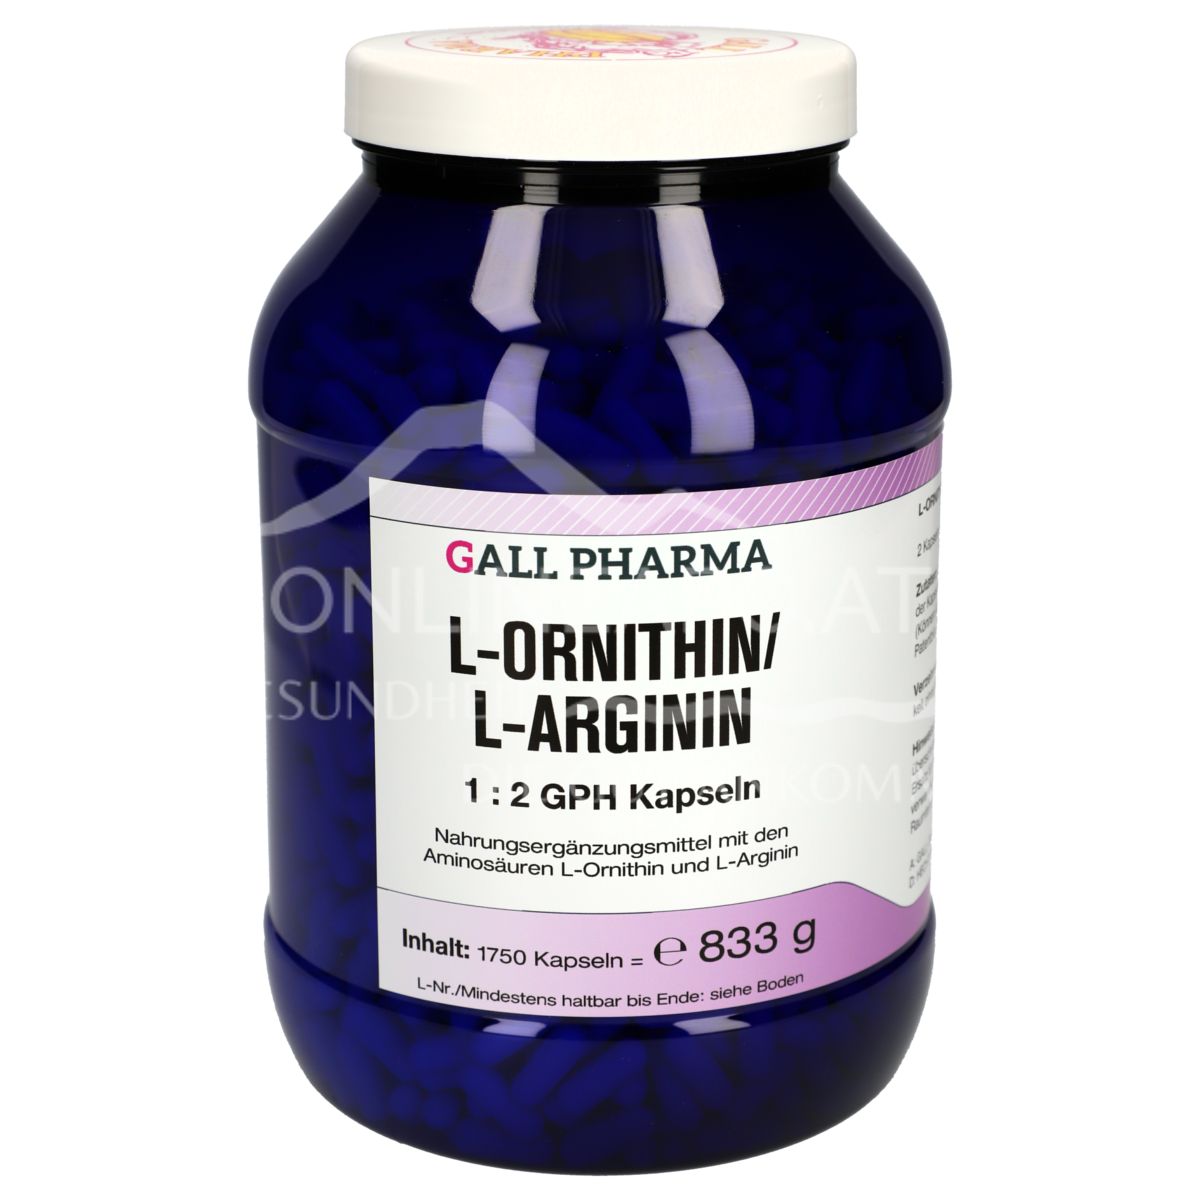 Gall Pharma L-Ornithin/L-Arginin 1:2 Kapseln